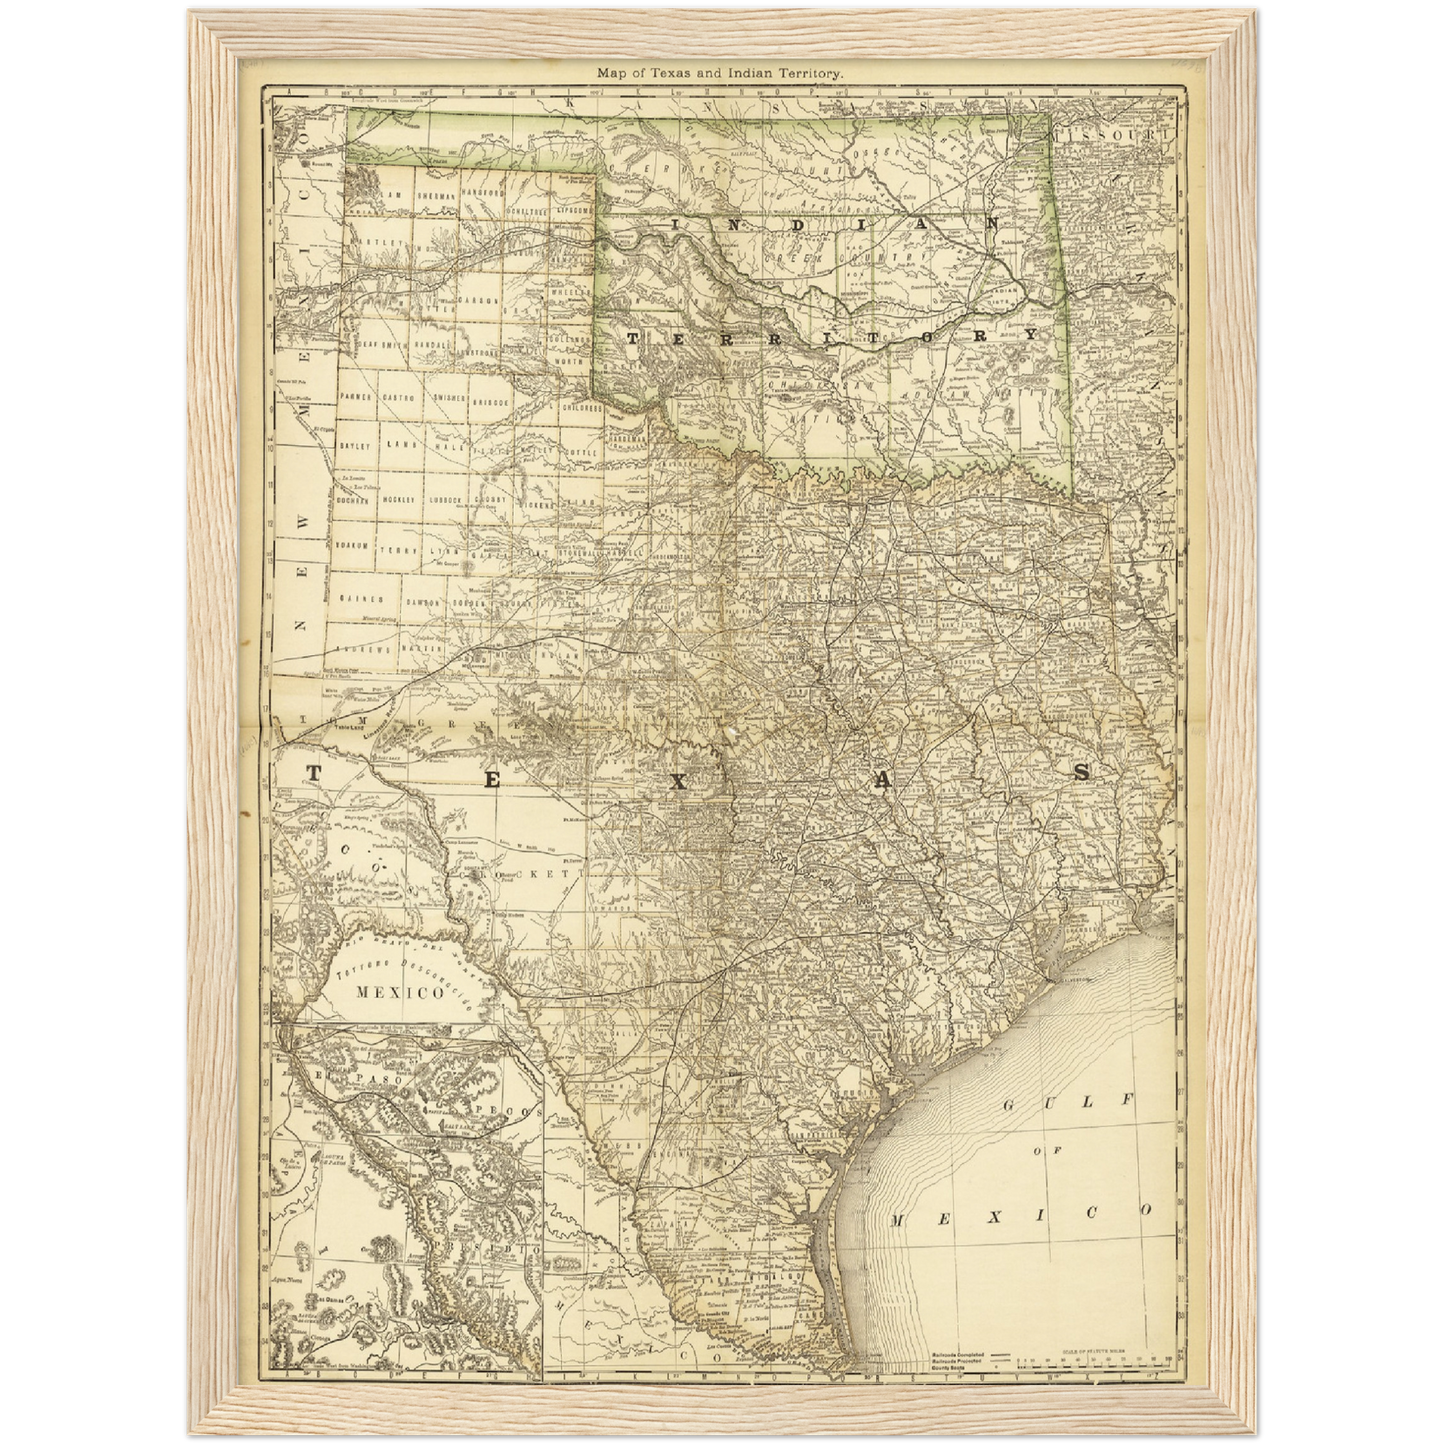 Historische Landkarte Texas um 1882